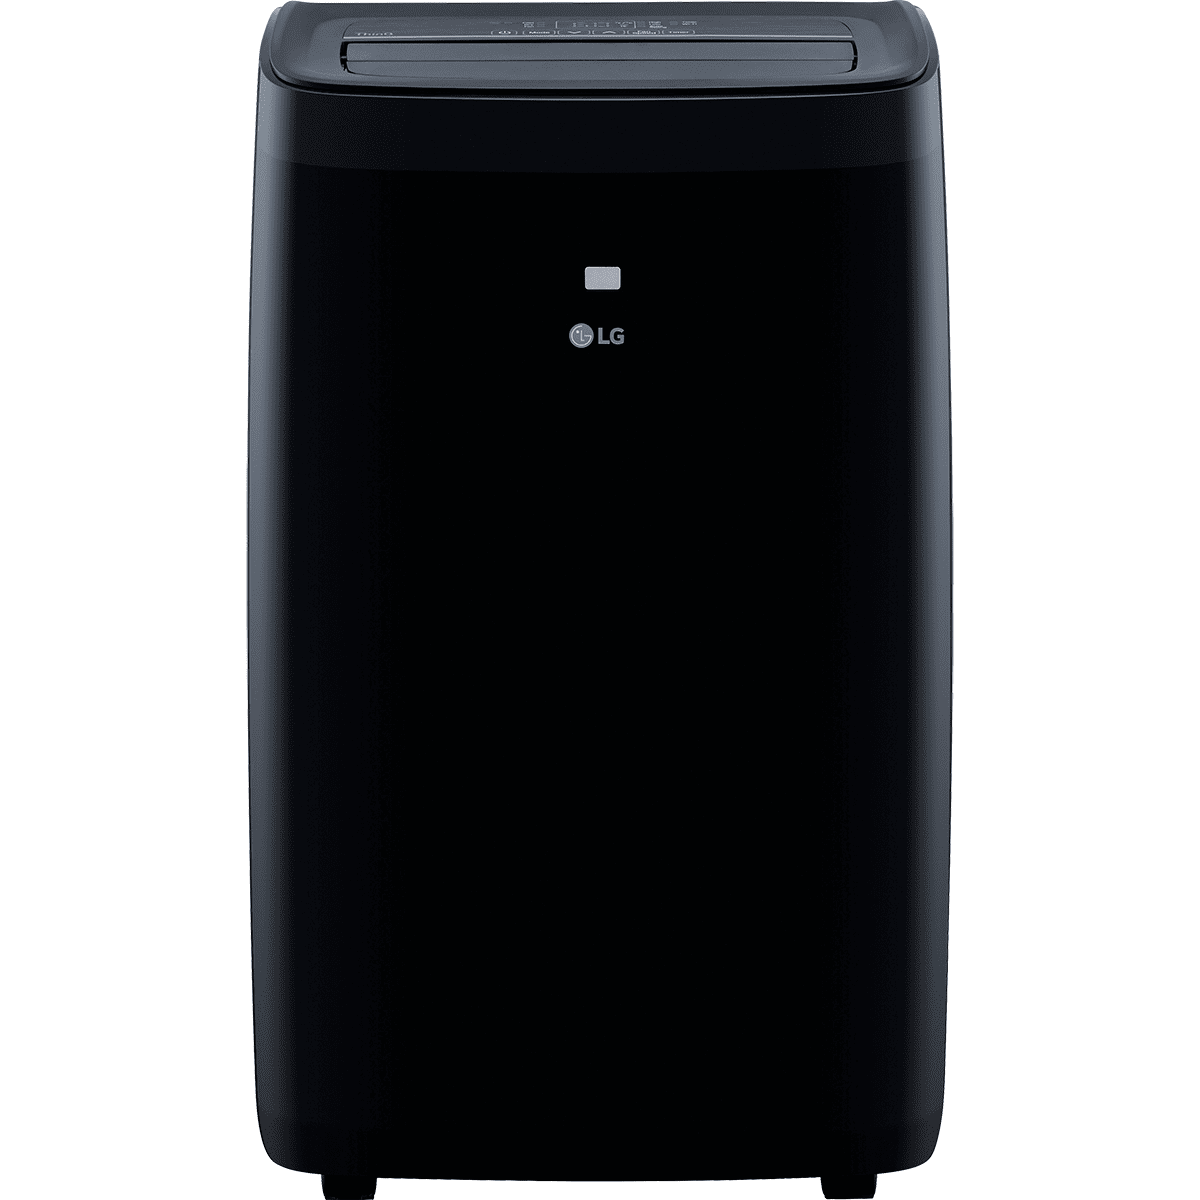 LG 10,000 BTU Wi-Fi Enabled Portable Air Conditioner